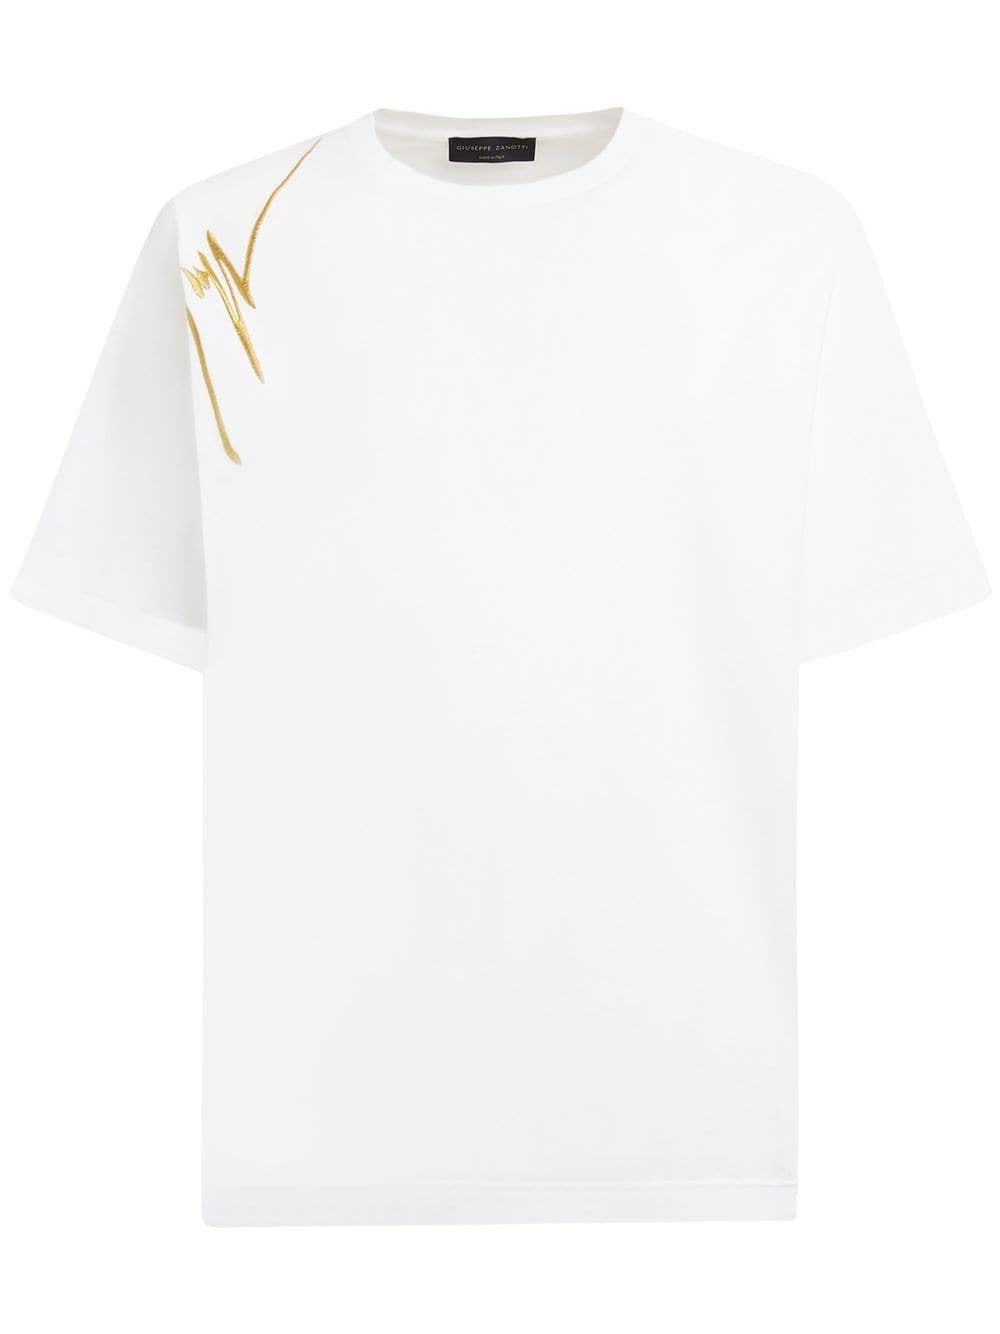 giuseppe zanotti t-shirt en coton à logo brodé - blanc